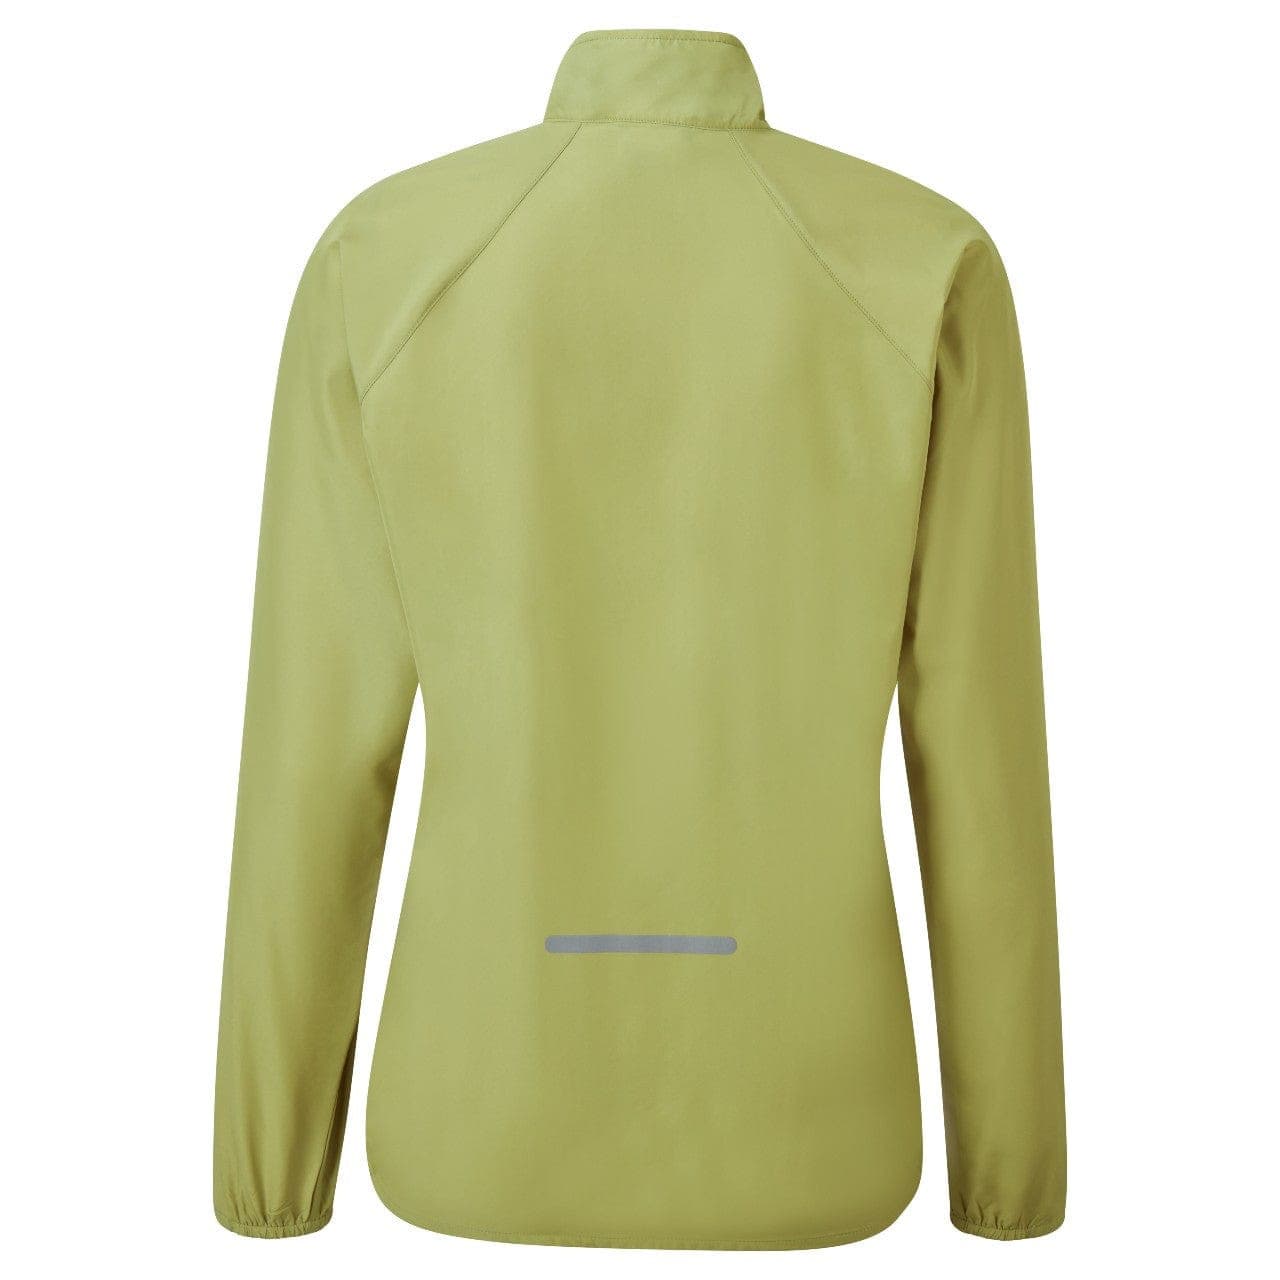 Ronhill Core Jacket (Womens) - Moss/Bubblegum